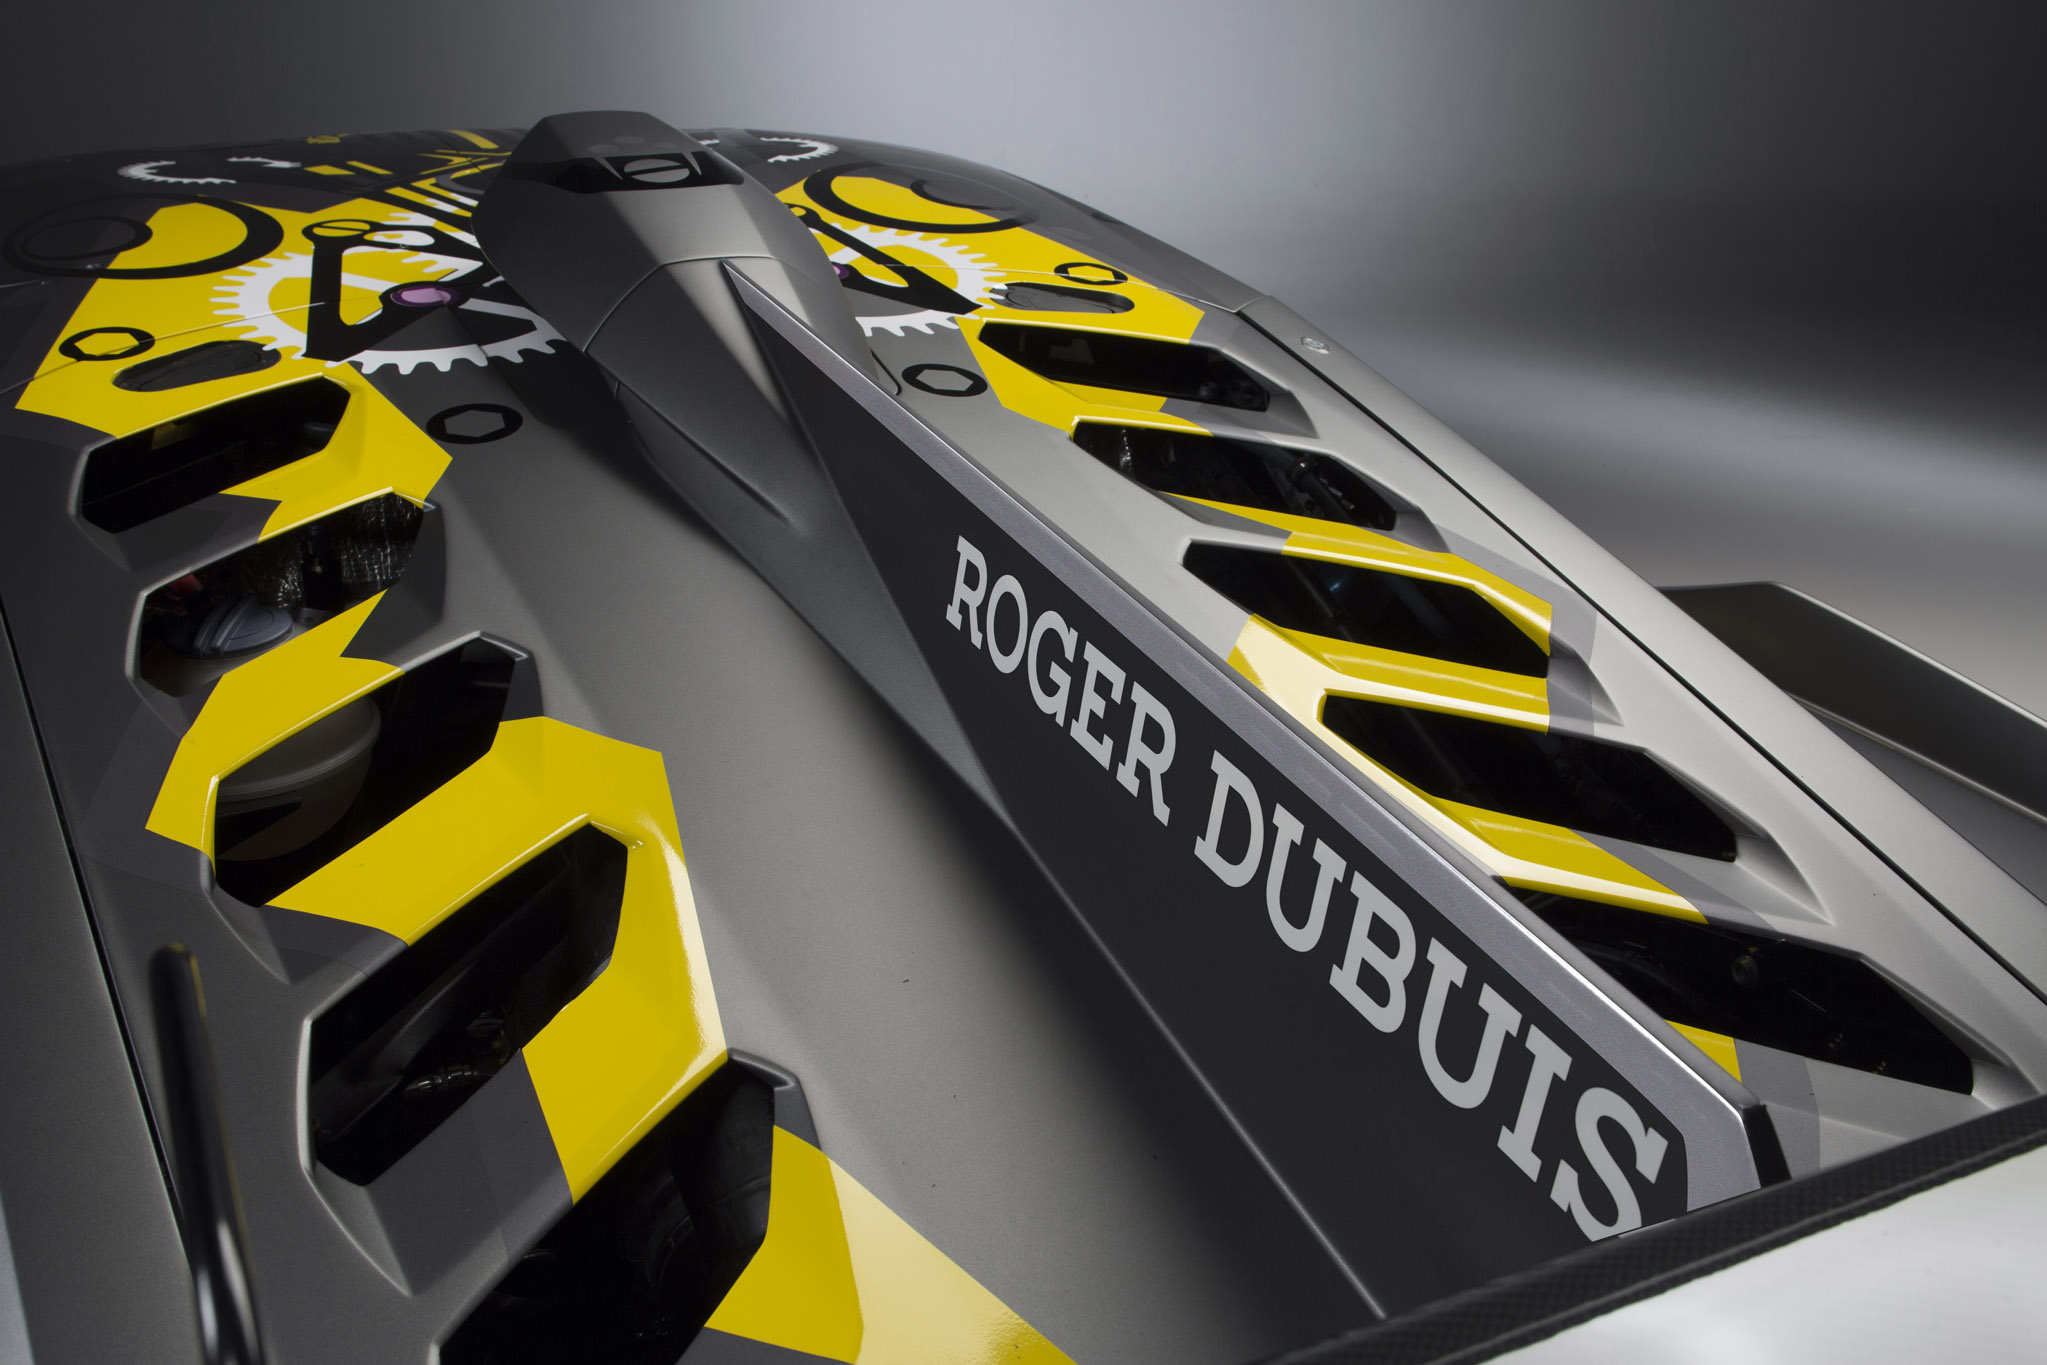 Lamborghini Huracan Super Trofeo Evo 2018